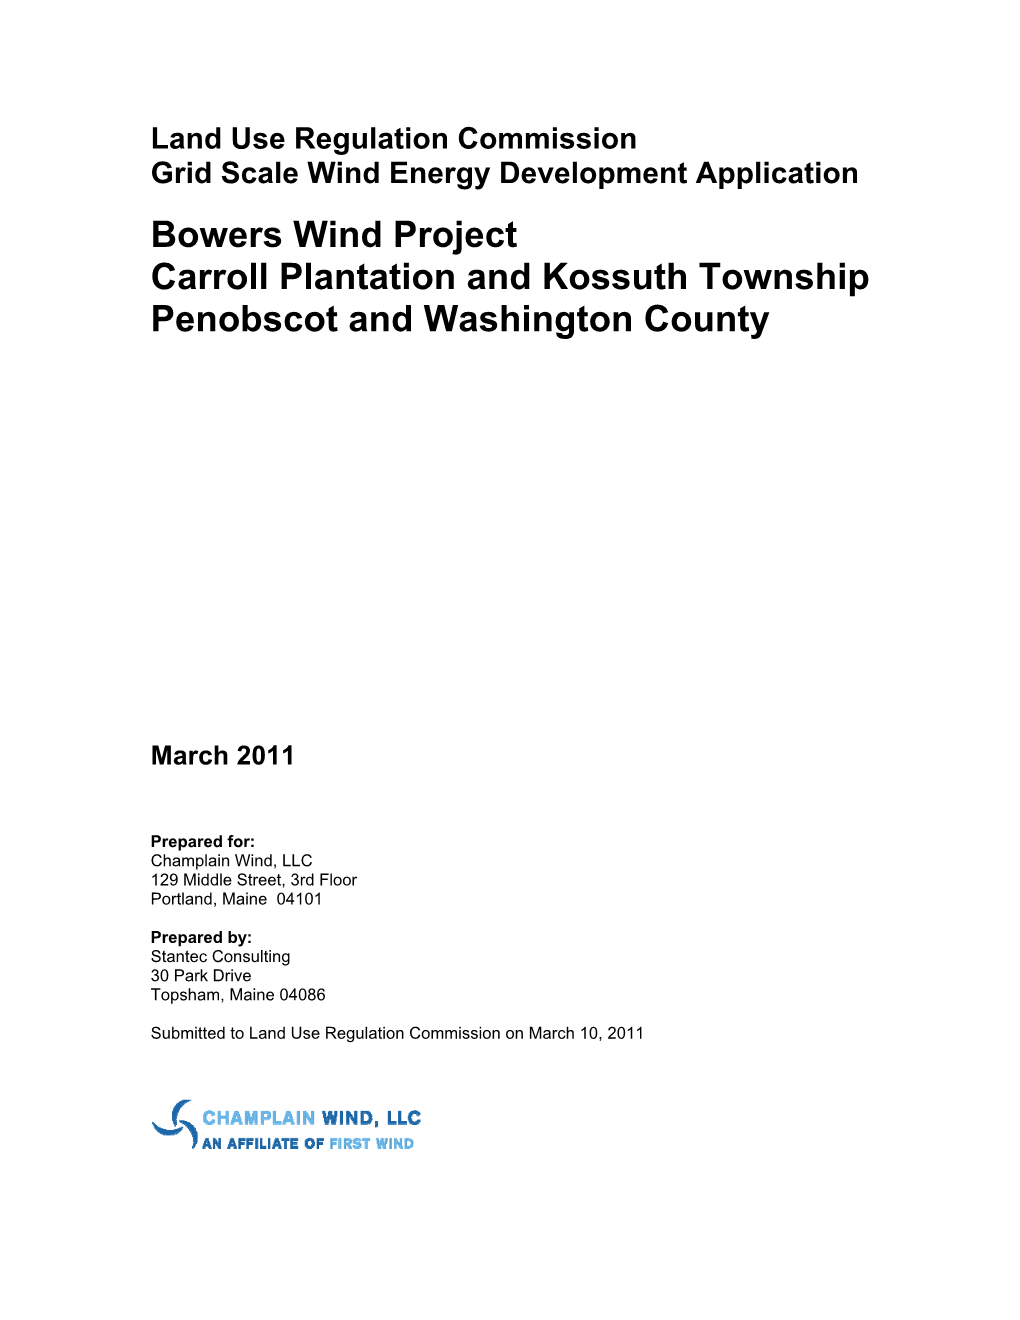 Bowers Wind Project Carroll Plantation and Kossuth Township Penobscot and Washington County